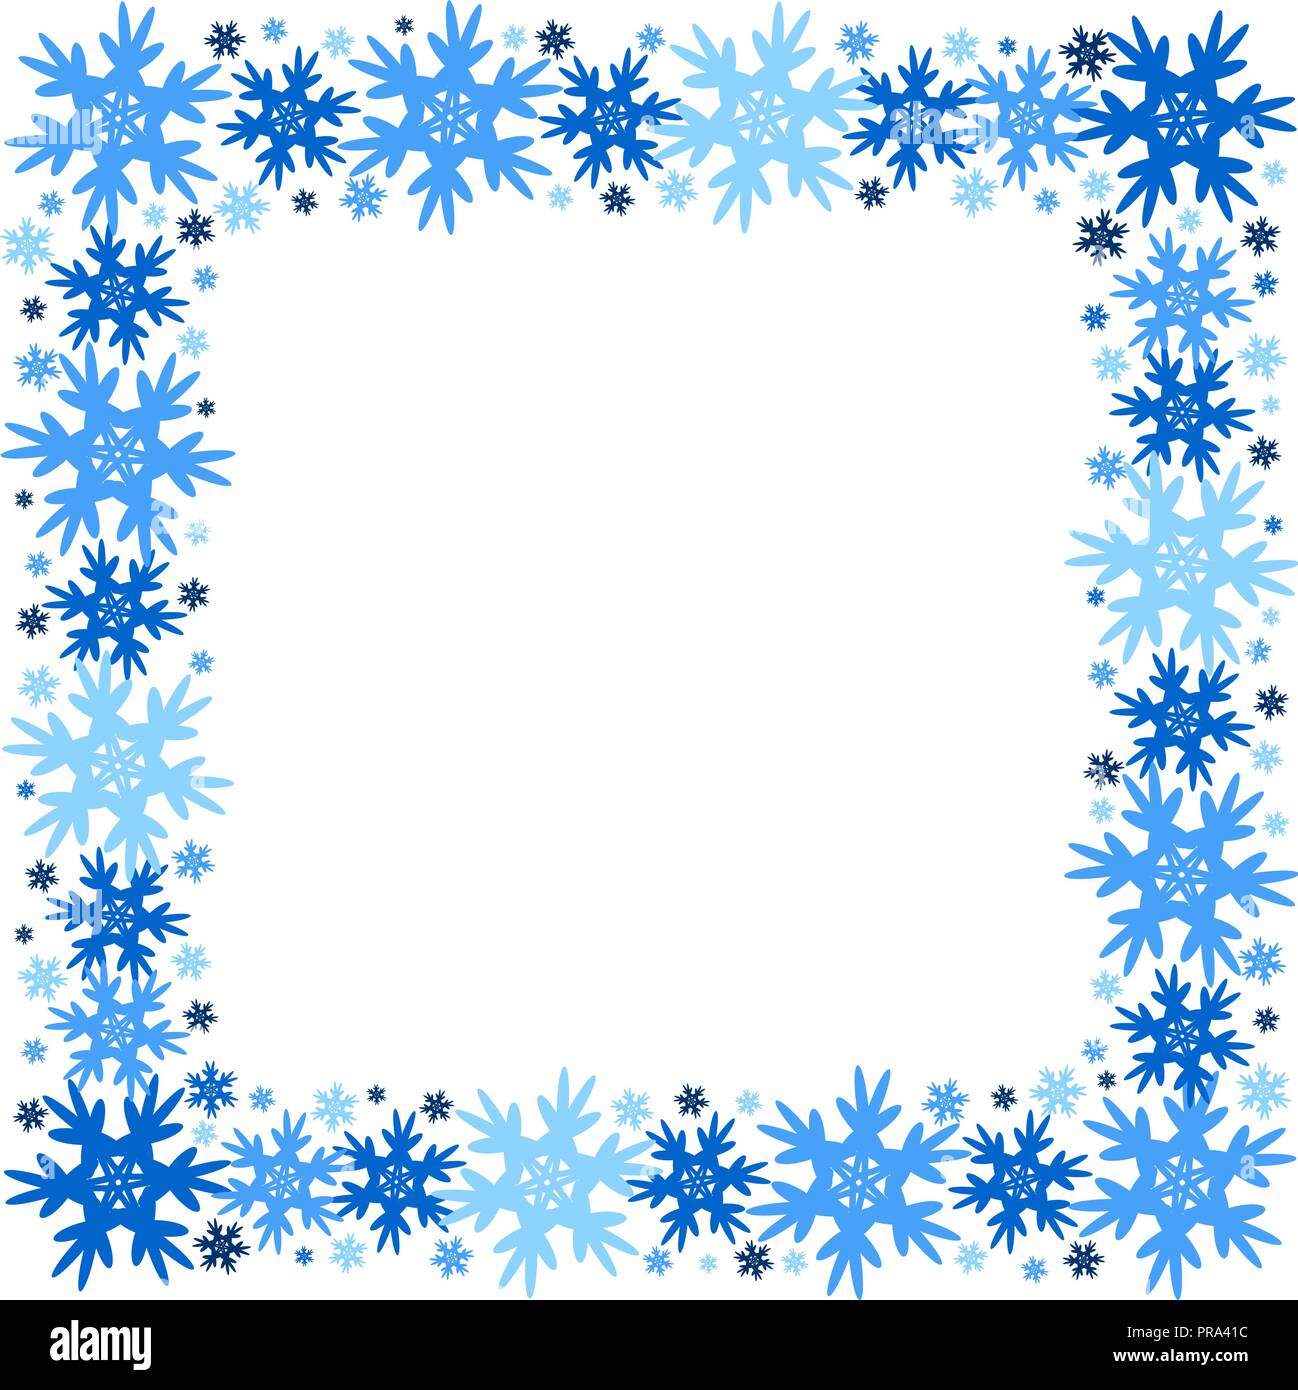 Platz Vektor Winter Rahmen der Schneeflocken. Isoliert. Eps 10  Stock-Vektorgrafik - Alamy